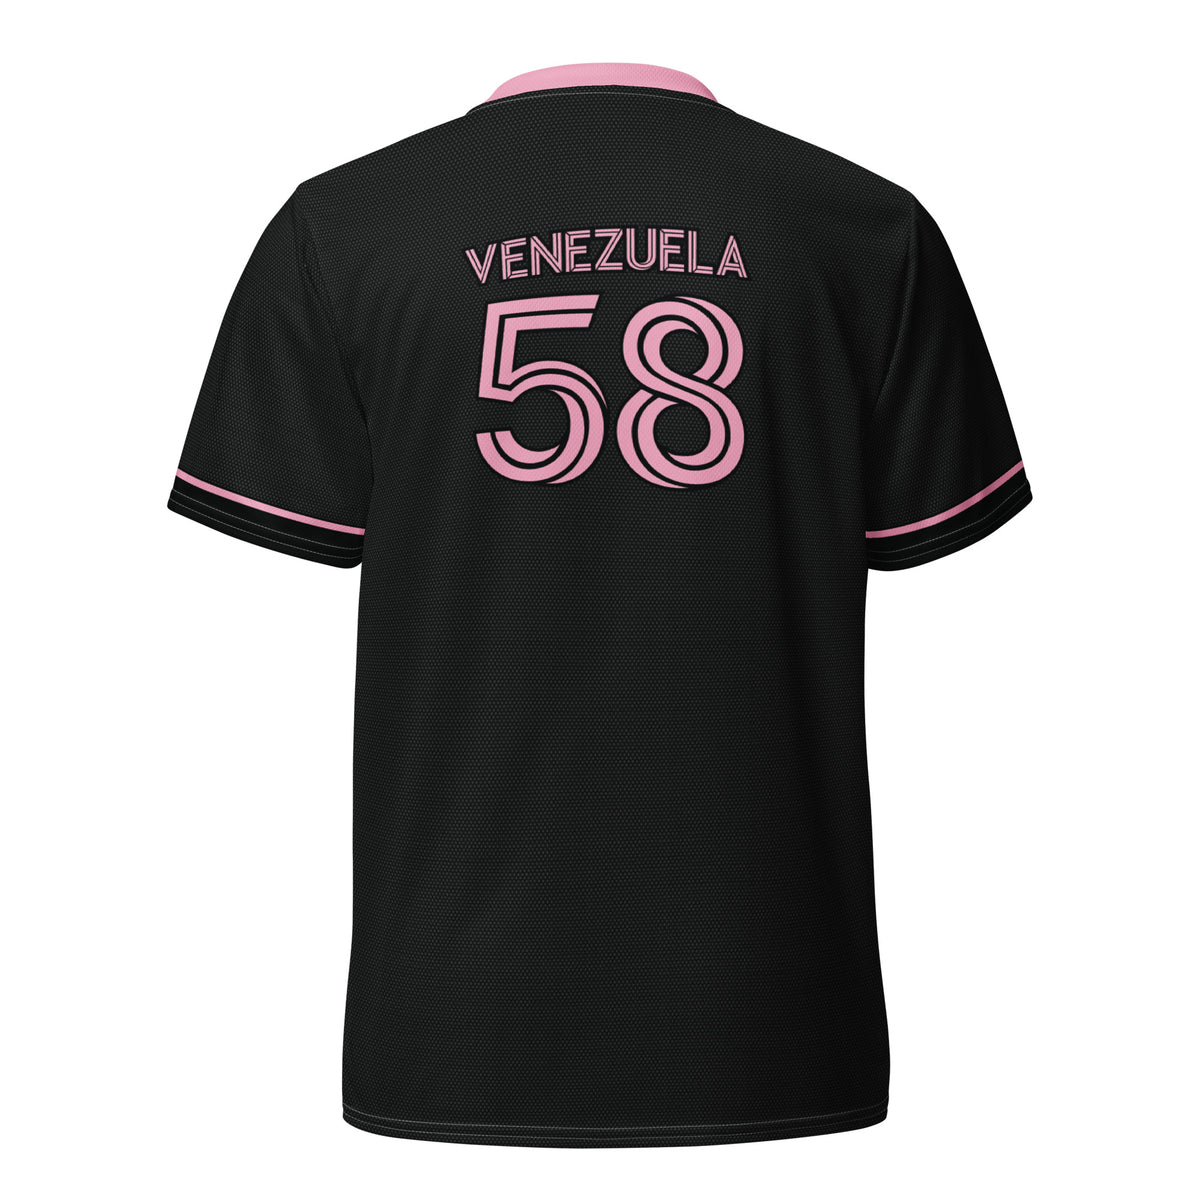 Venezuela T-Shirt (Sports Jersey - Unisex) Venezuela Mundial - Club de Fútbol Internacional